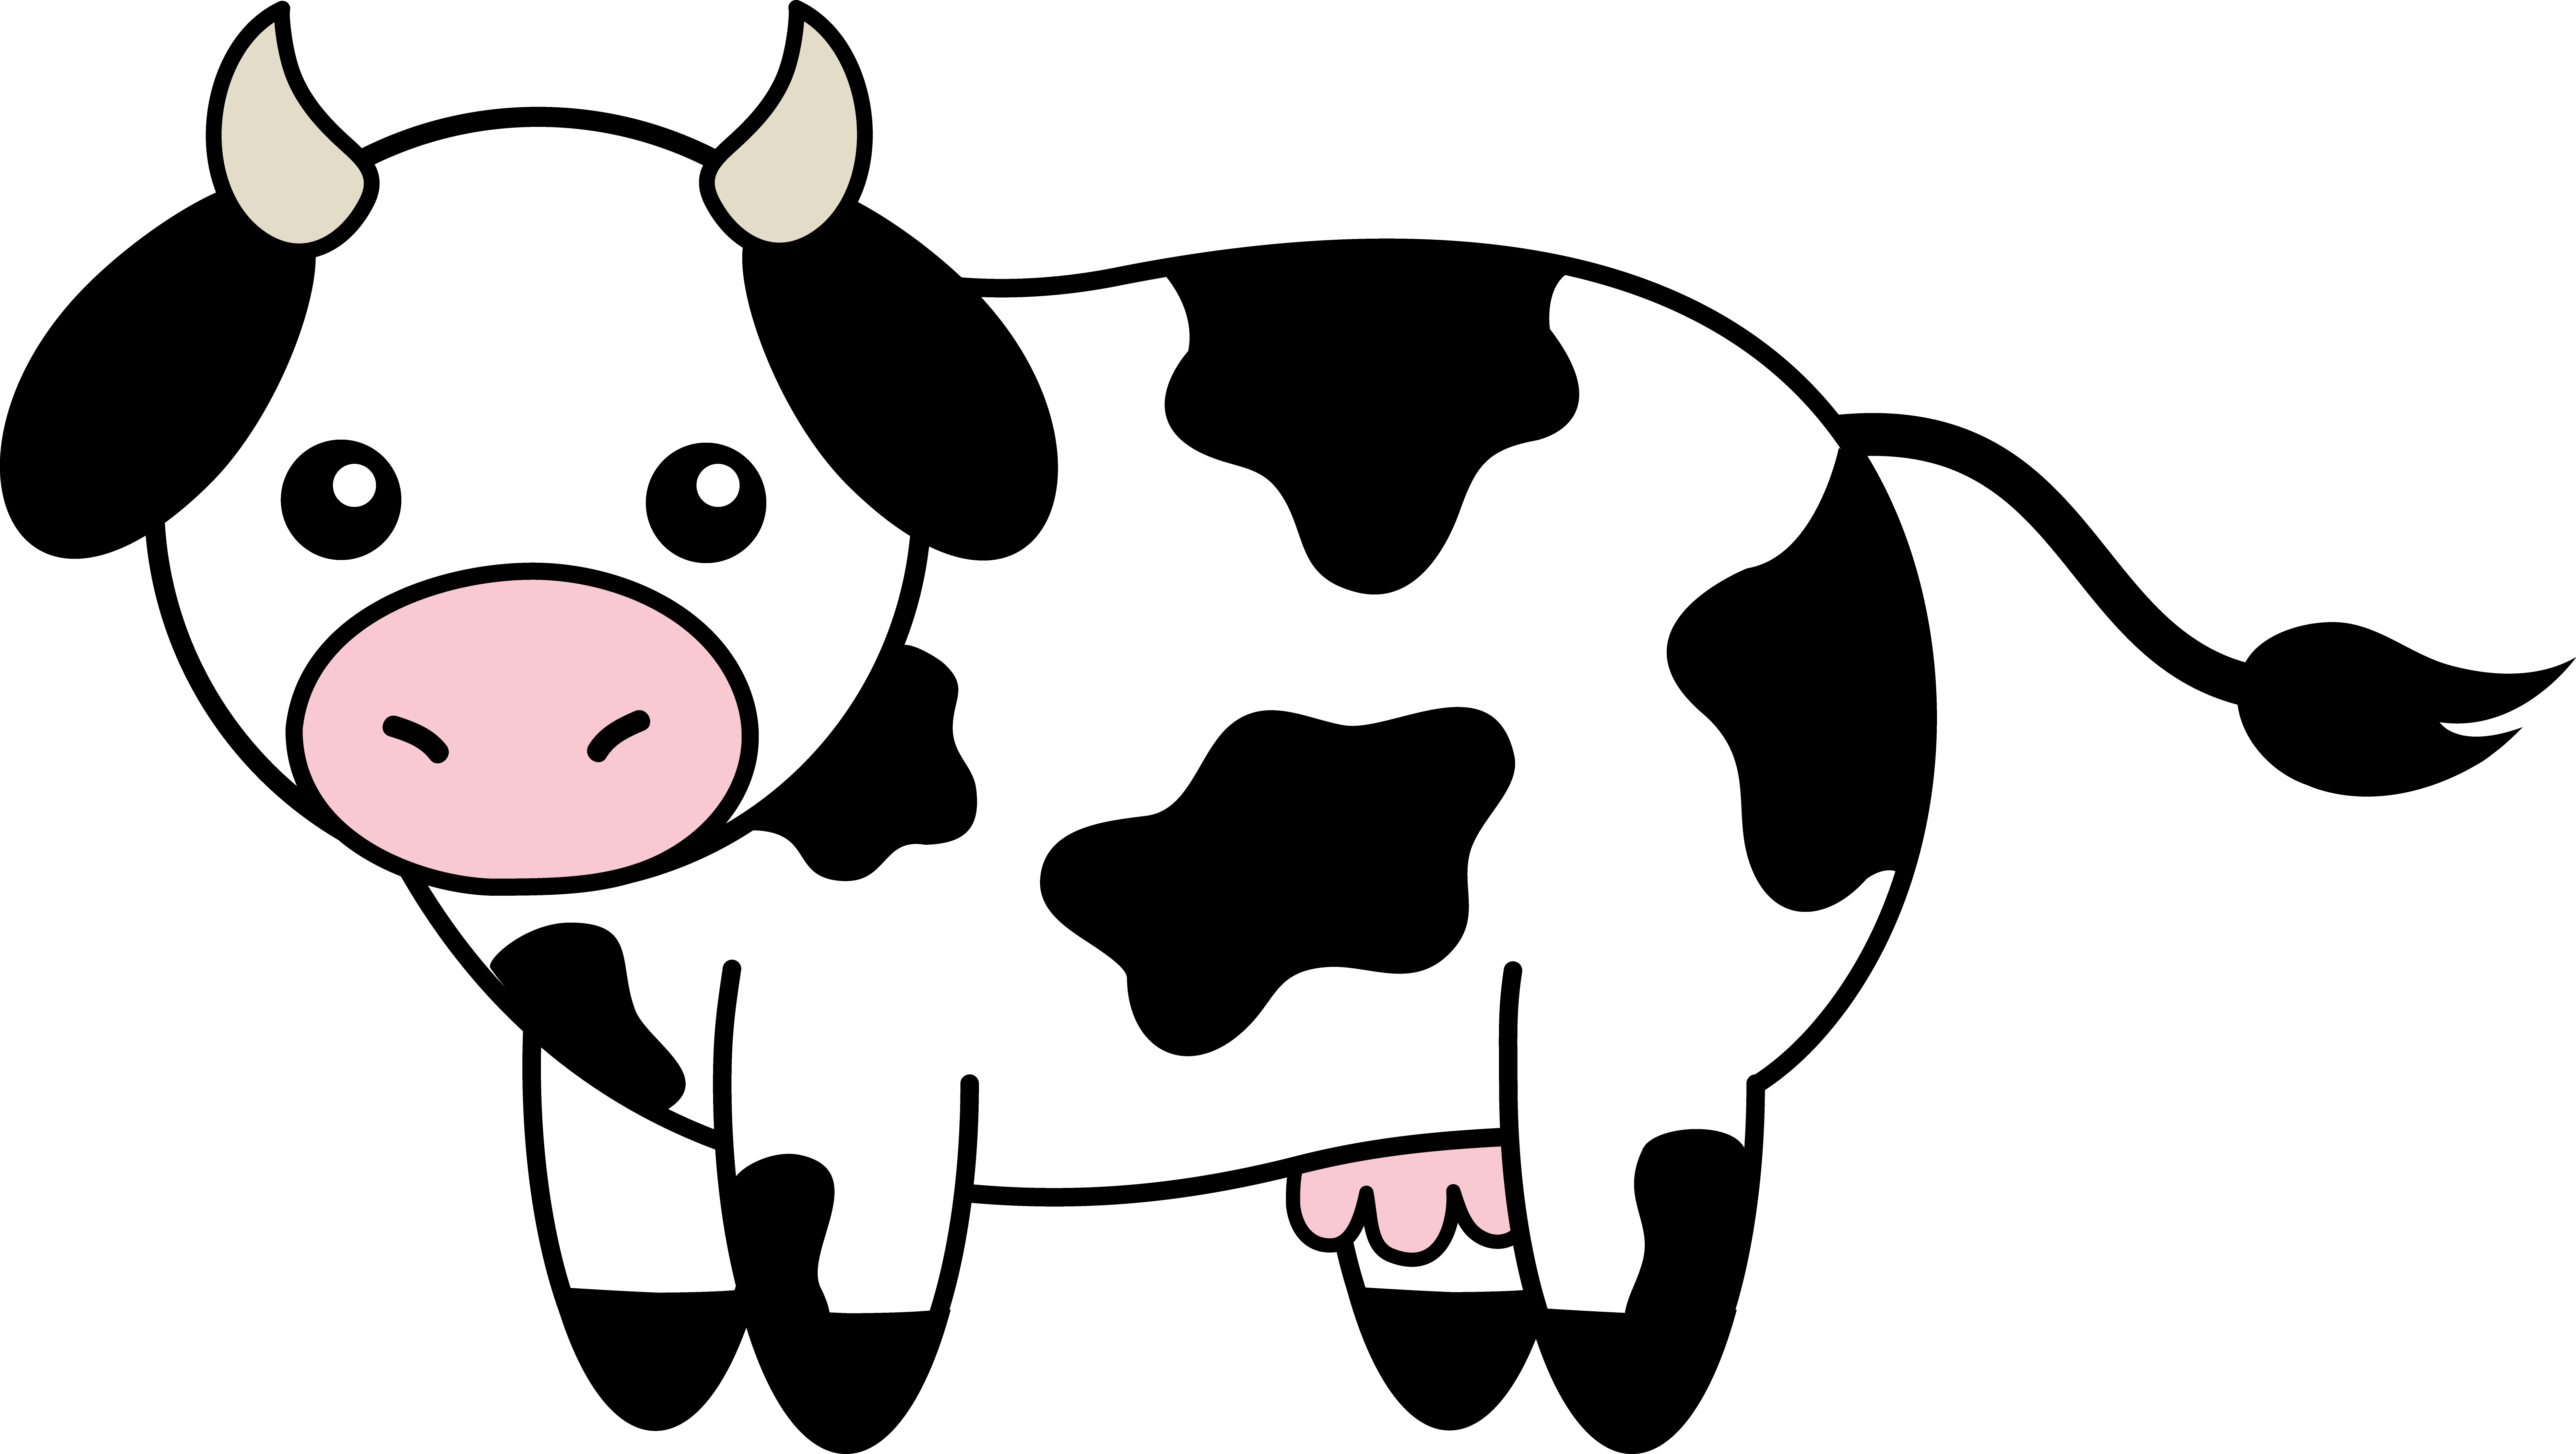 Cow png transparent image